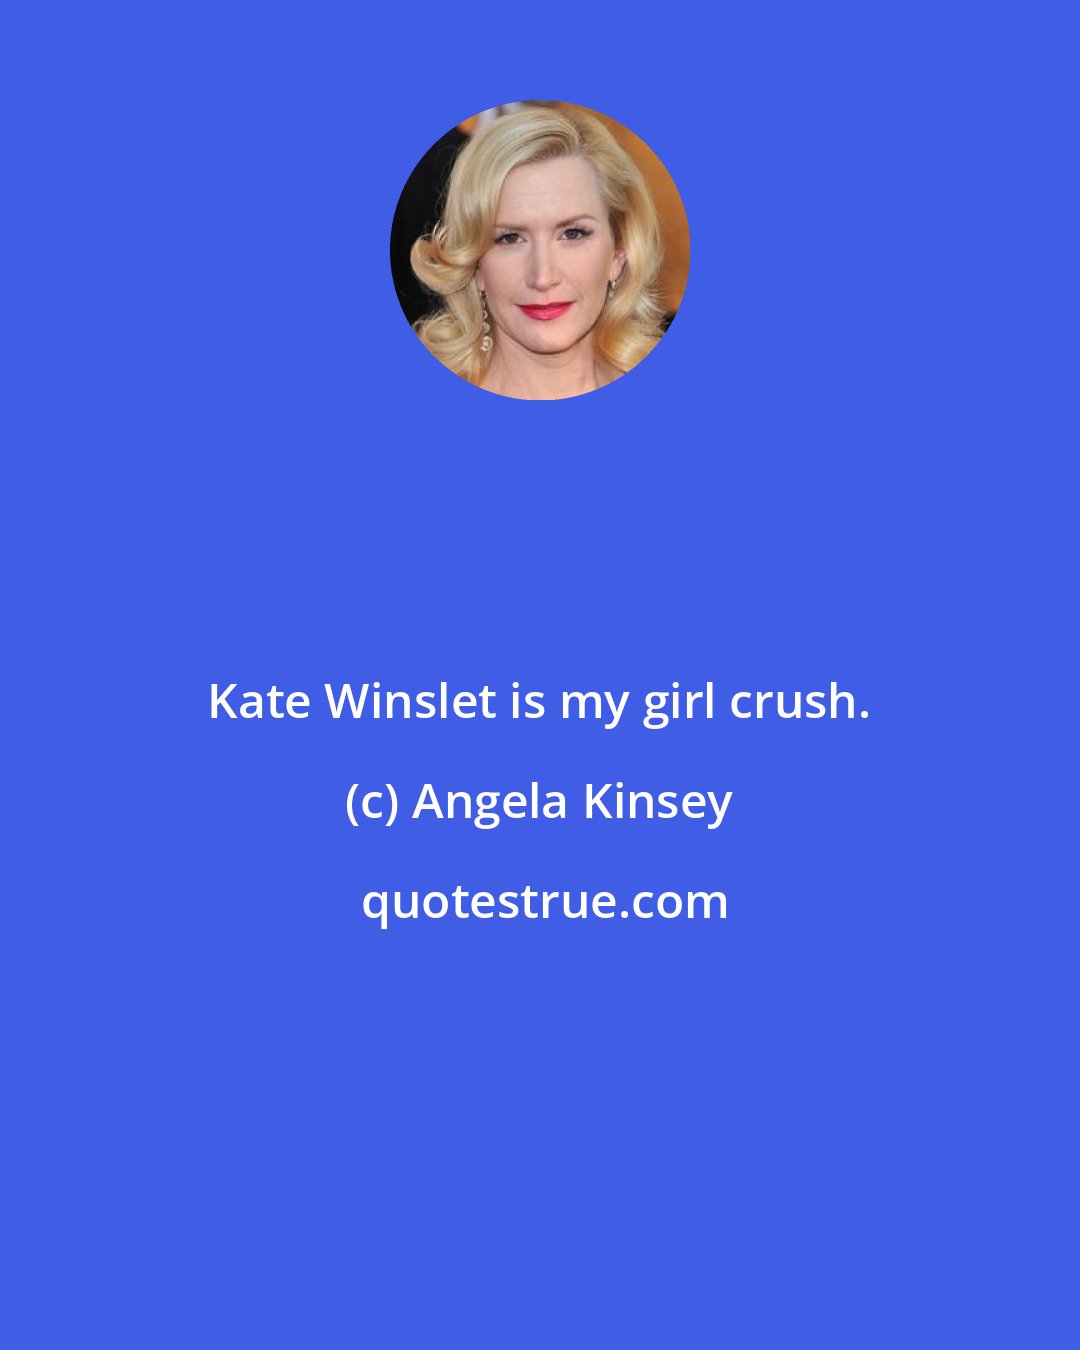 Angela Kinsey: Kate Winslet is my girl crush.